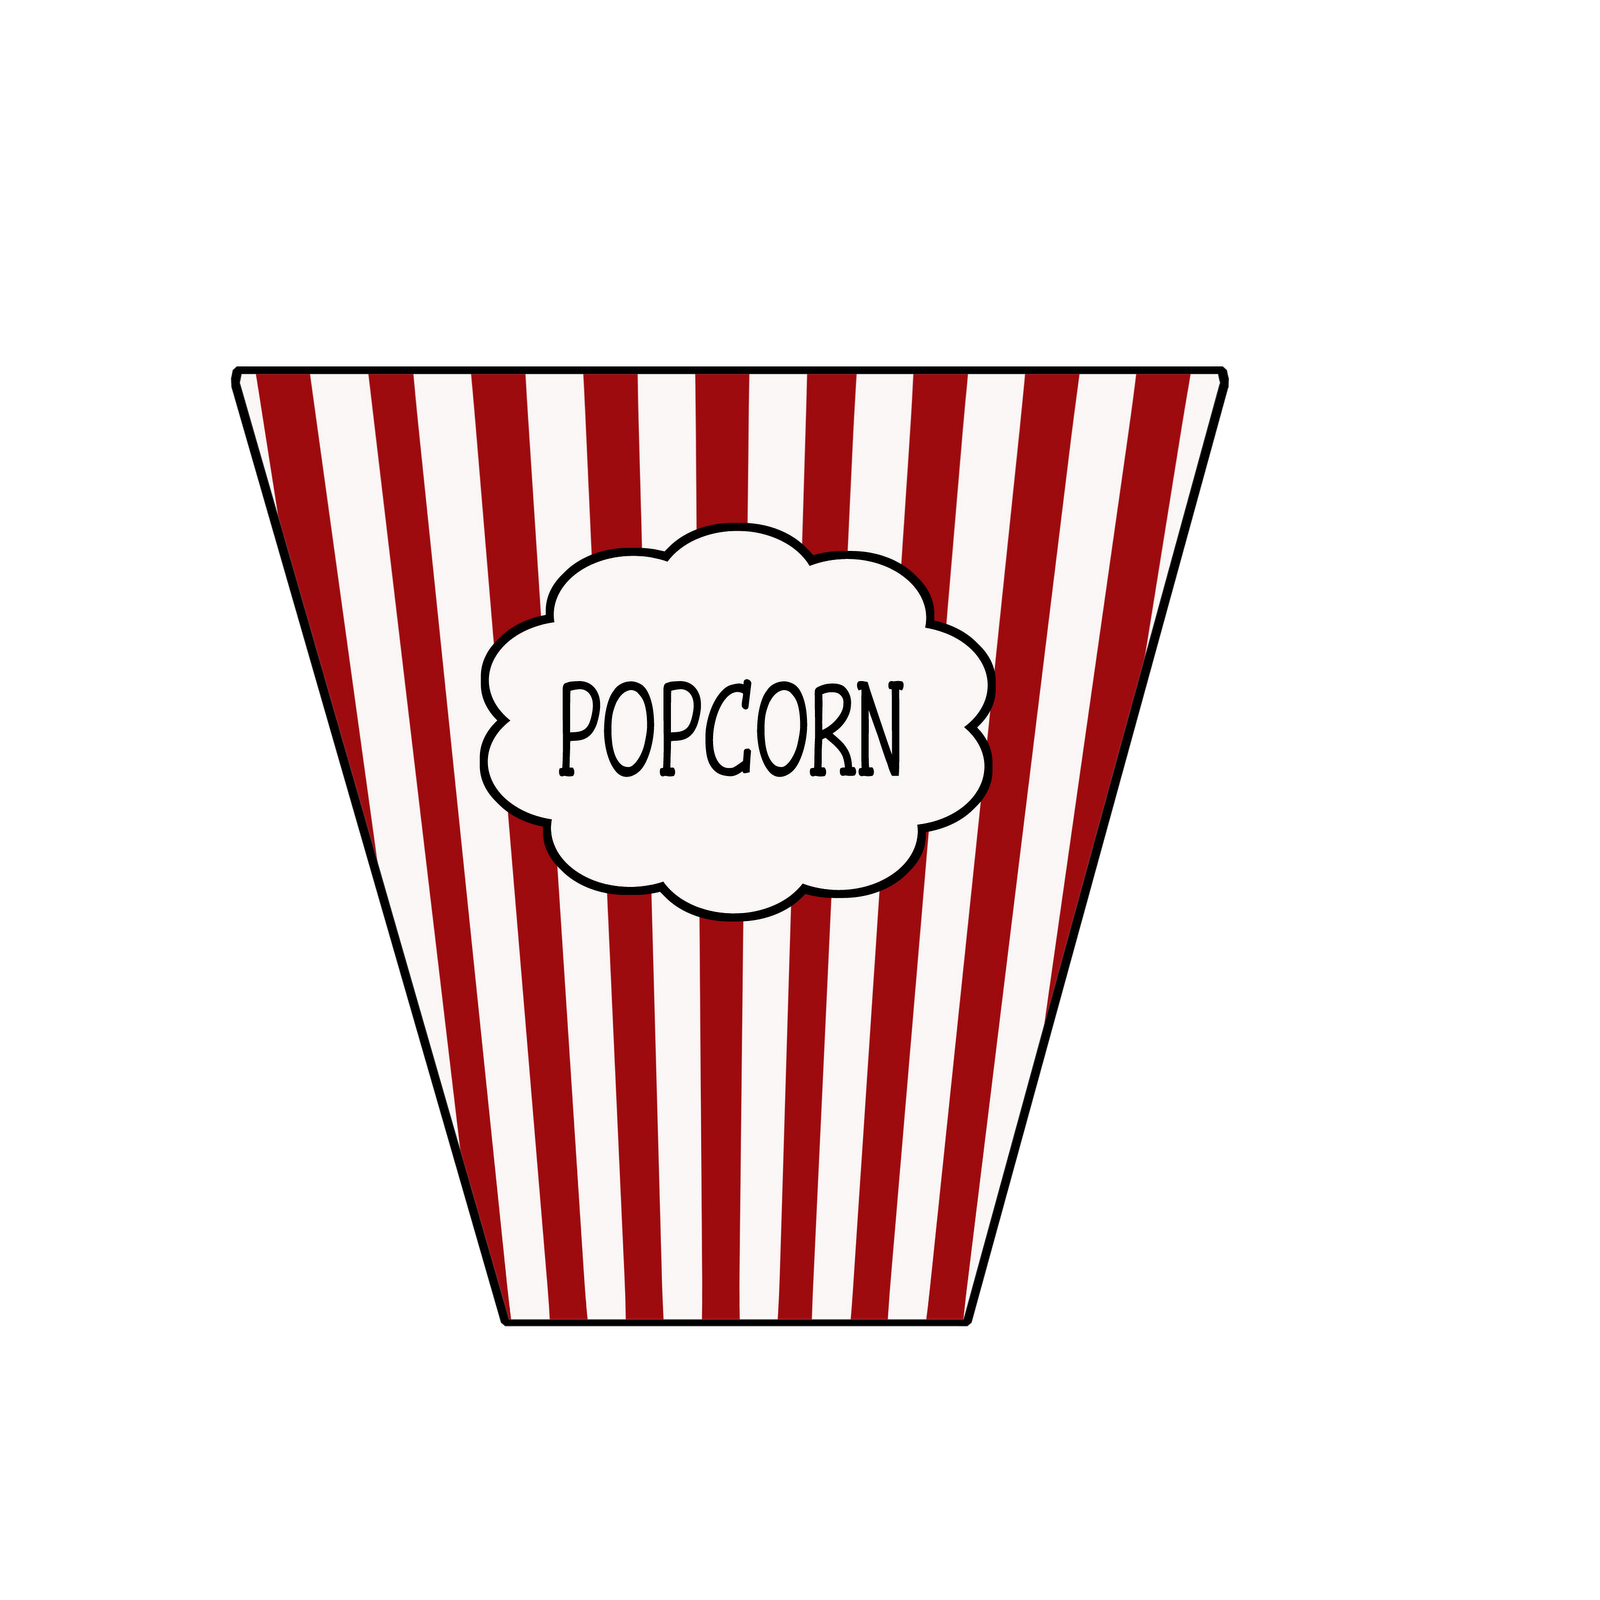 Popcorn Bag Clip Art ClipArt Best